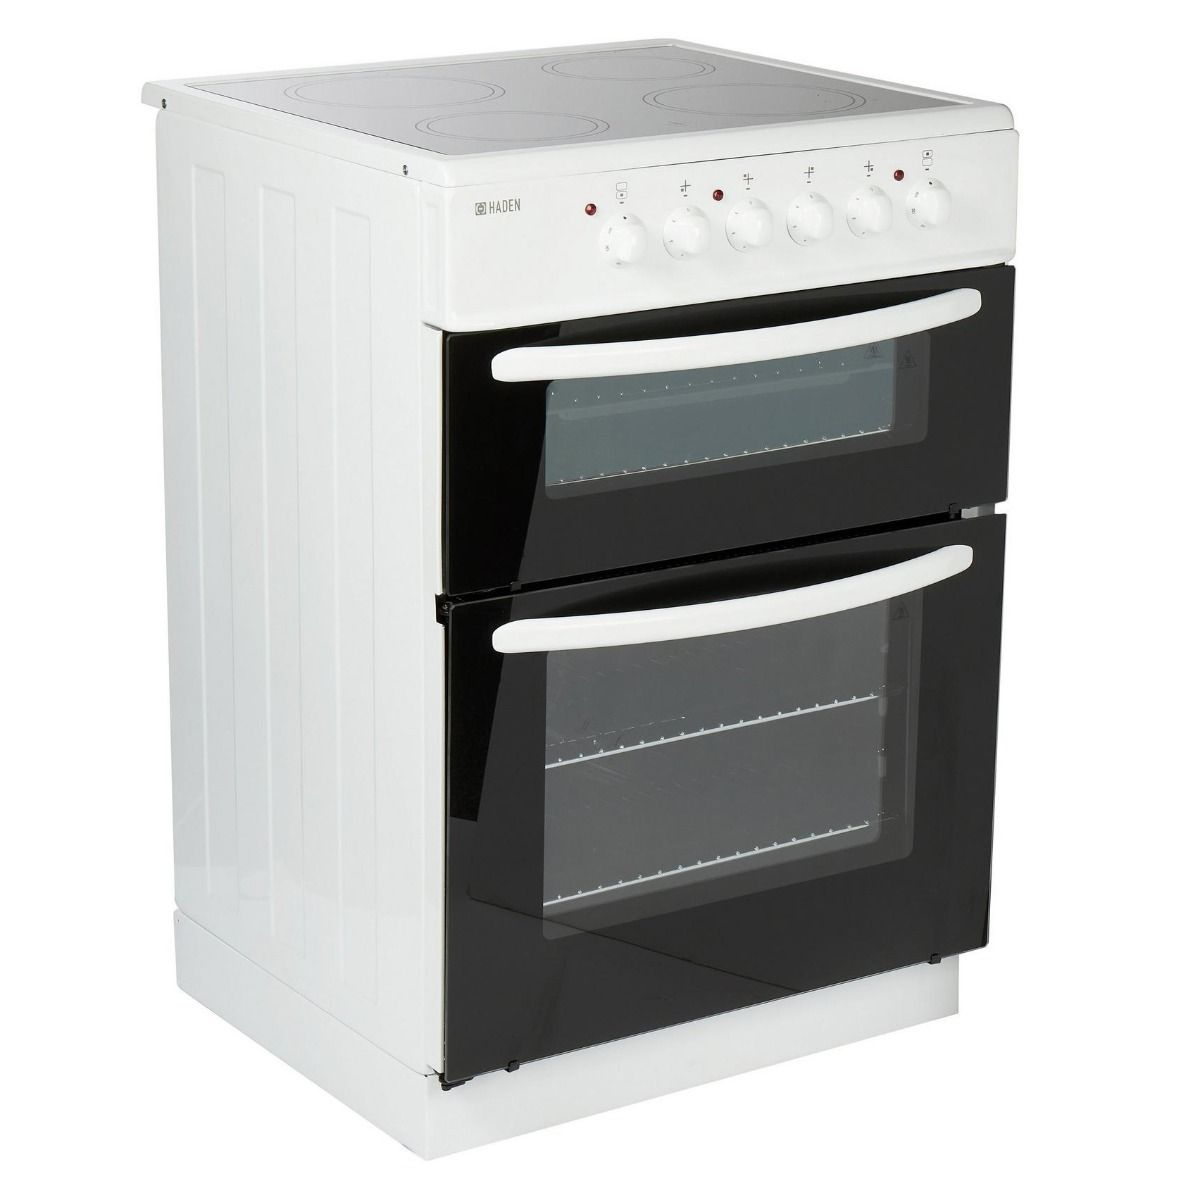 Haden HE60DOMW 60cm Double Oven Ceramic Cooker in White | Atlantic Electrics